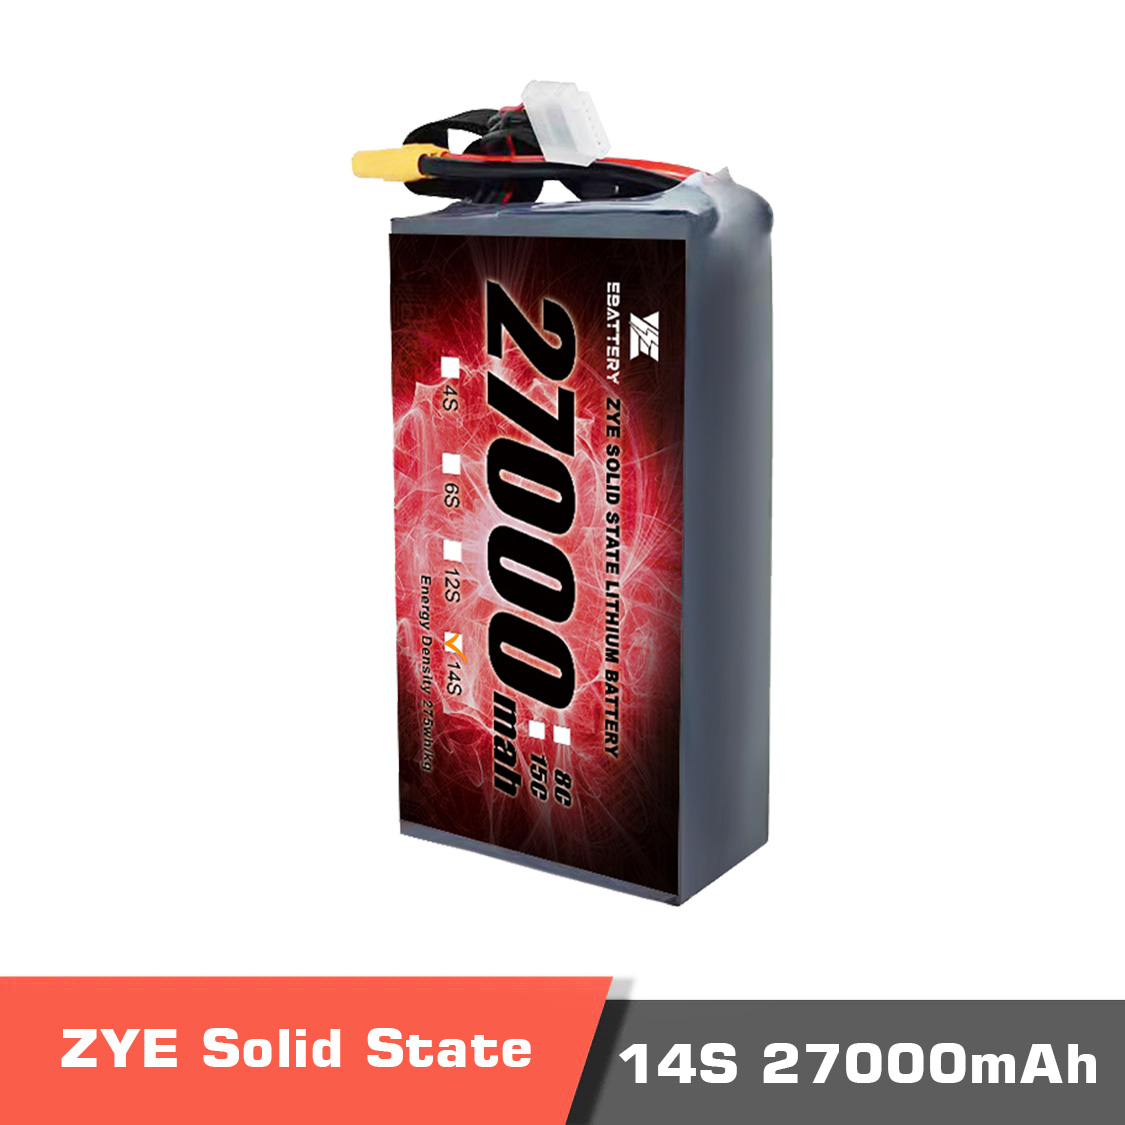 ZYE 27000 14s temp.1 - ZYE Power Ultra HV Semi Solid-State Battery, Ultra HV Semi Solid-State Battery, 12S 27000mAh high voltage LiPo Battery, 12S 27000mAh HV LiPo Battery, Solid-state LiPo battery, lipo battery, drone battery, 12s battery, high energy density battery, UAV, drone, vtol, ZYE Power, ZYE power Battery - MotioNew - 2